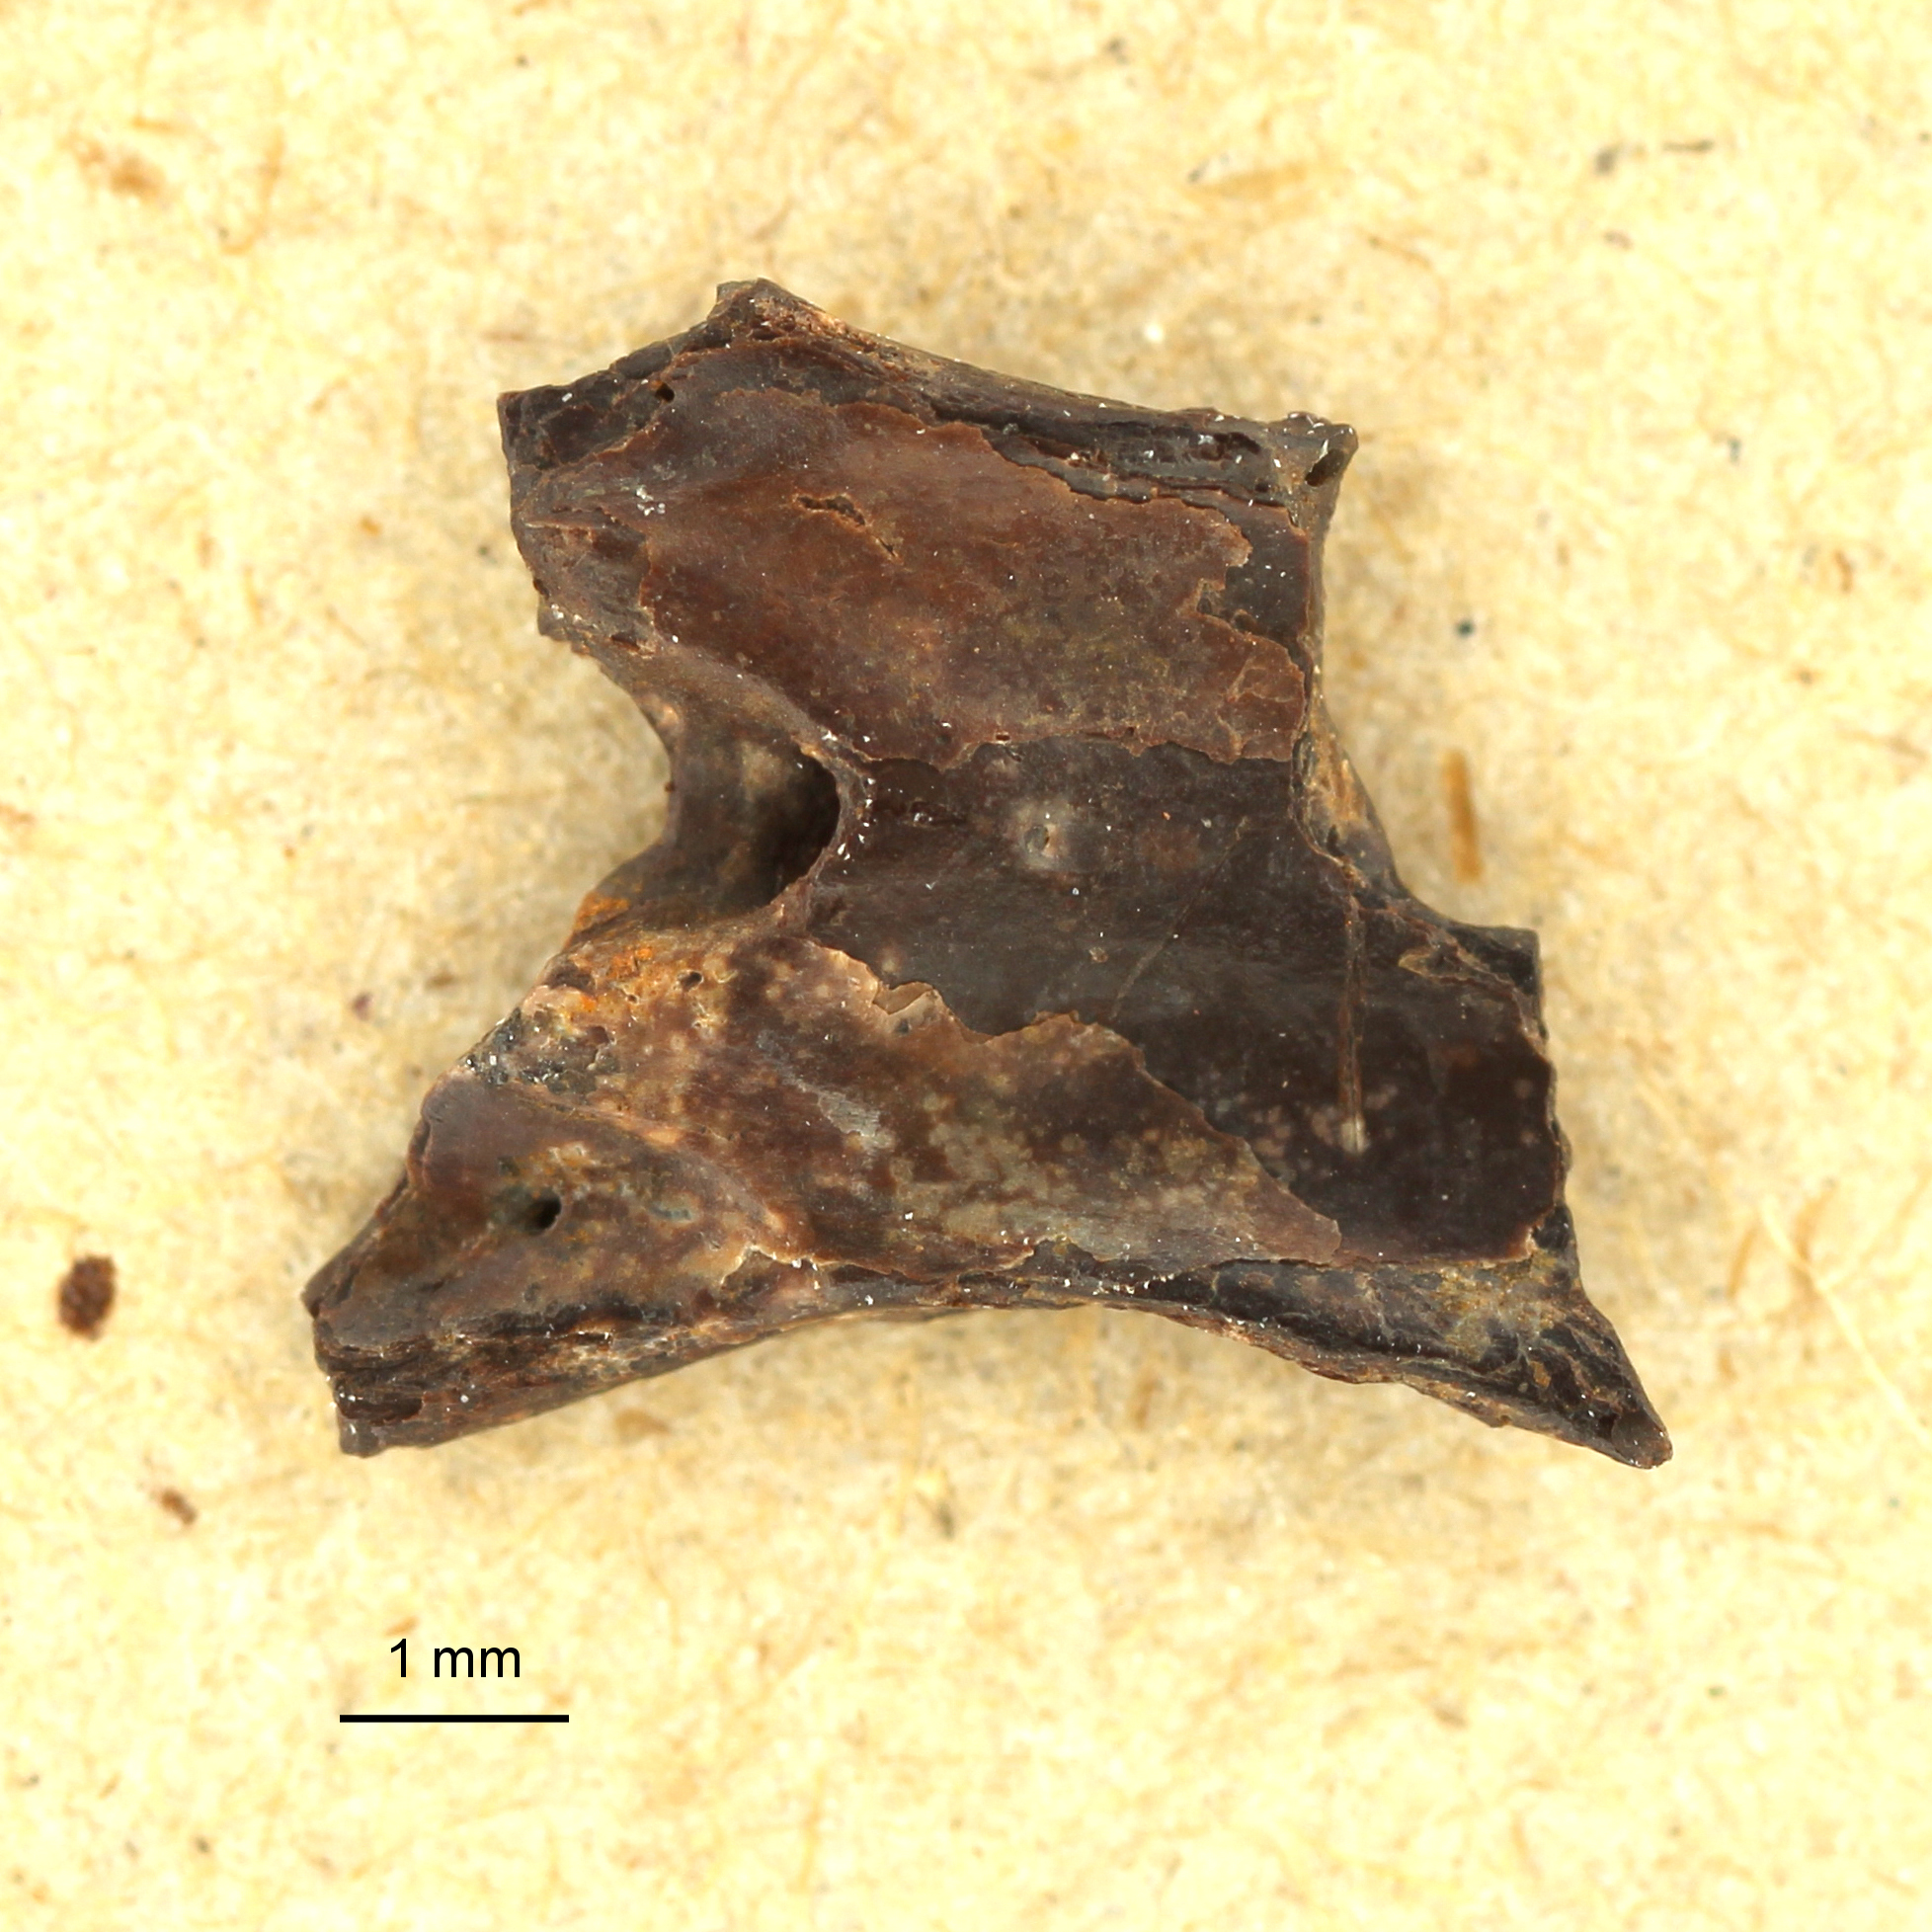 IRSNB R 0247 (Dopasia roqueprunensis) ventral view